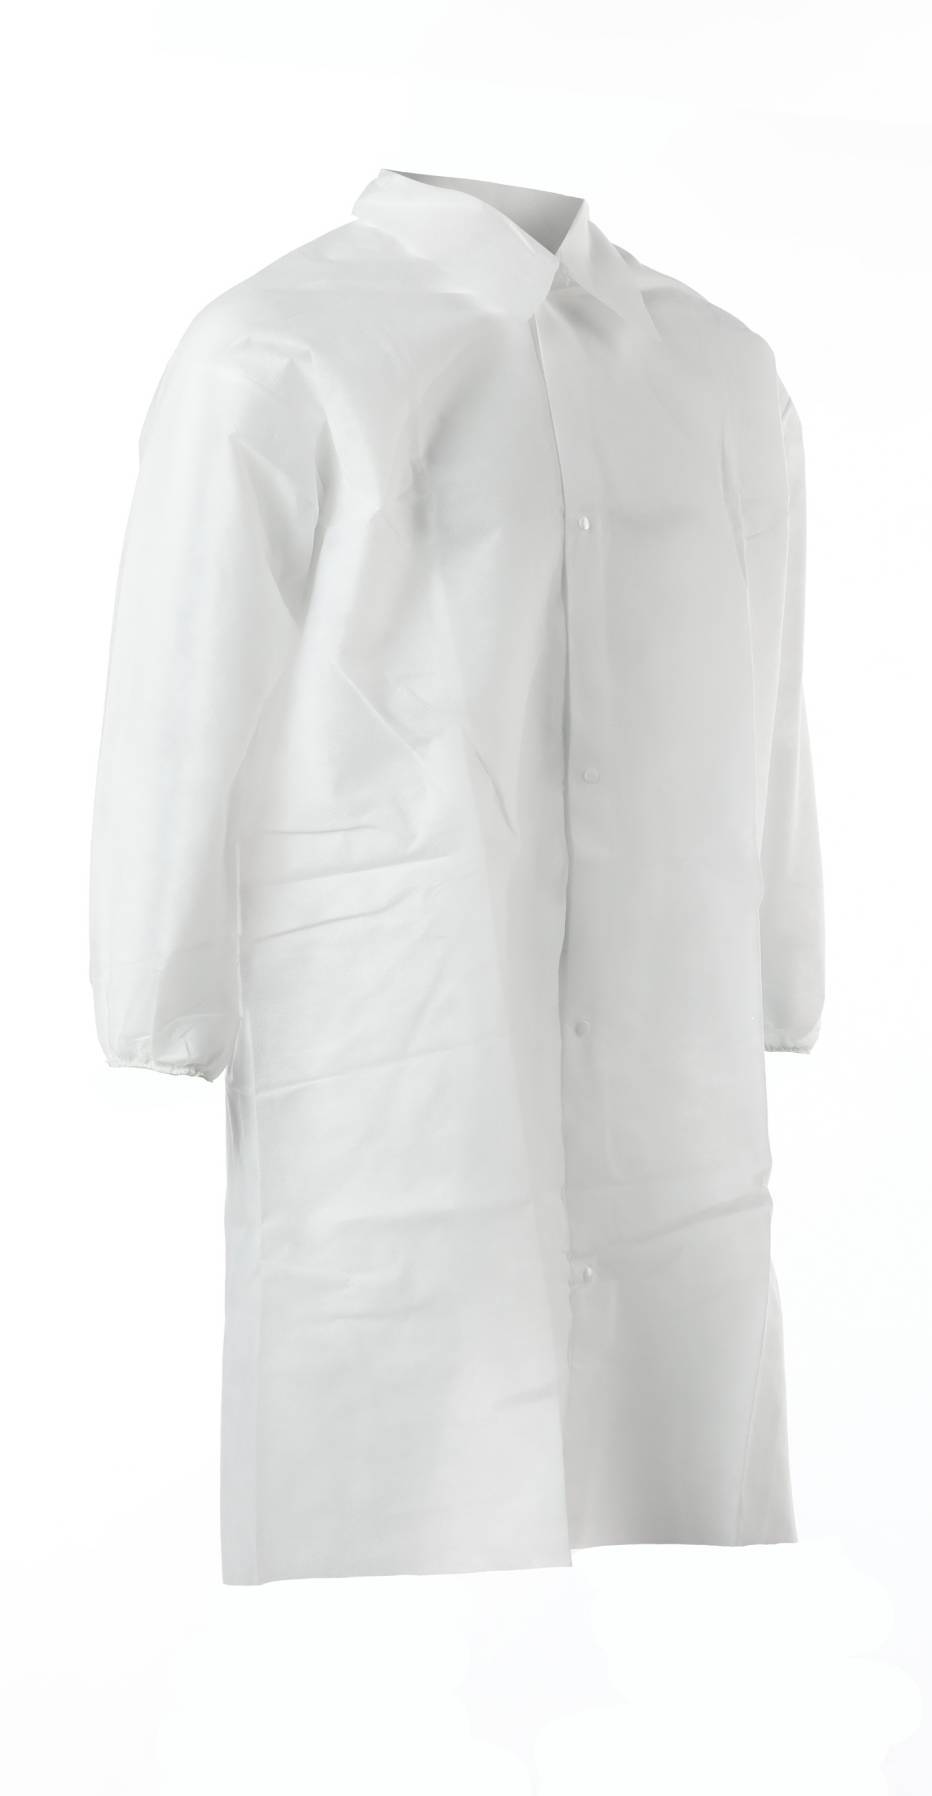 FK-12122 Alpha Protech® GenPro® lab coats with no pockets